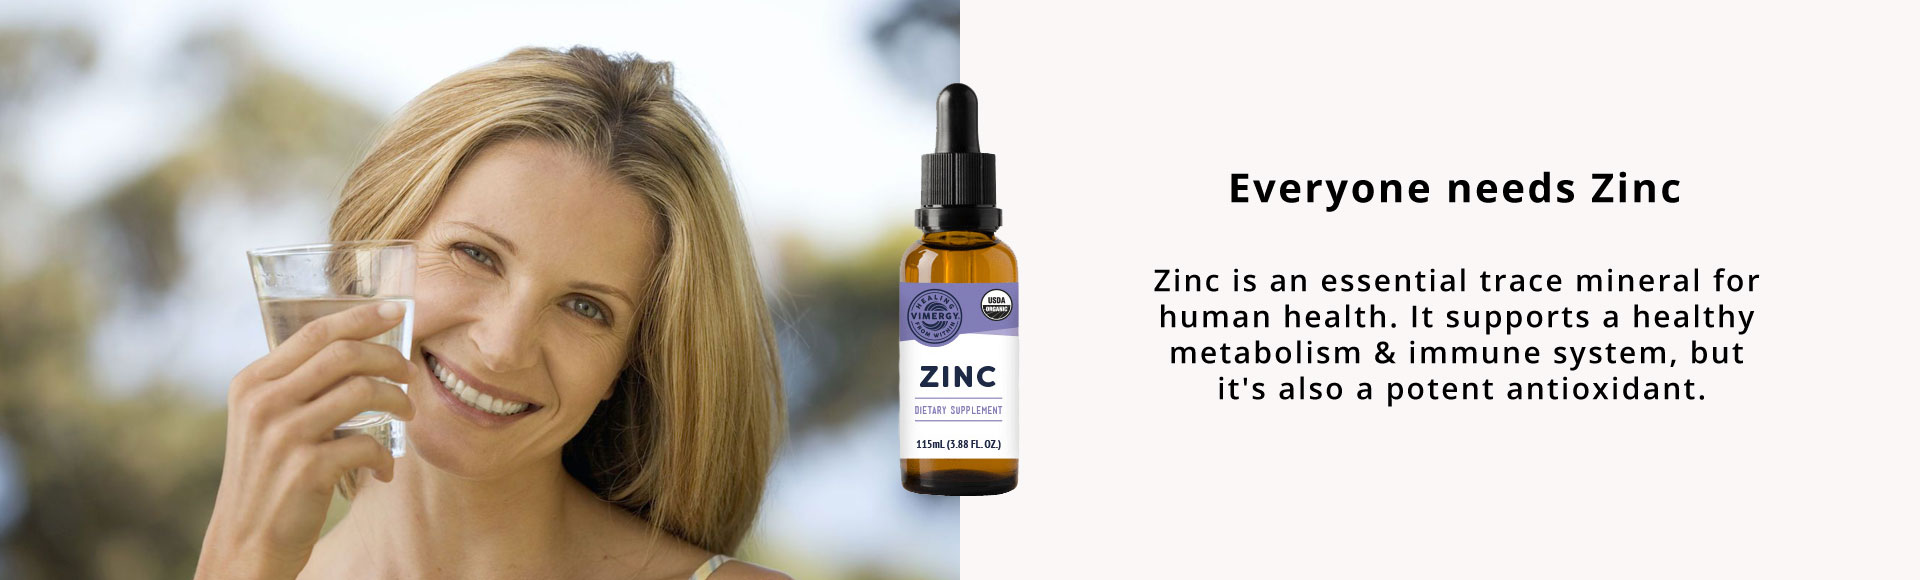 Everyone Needs Zinc